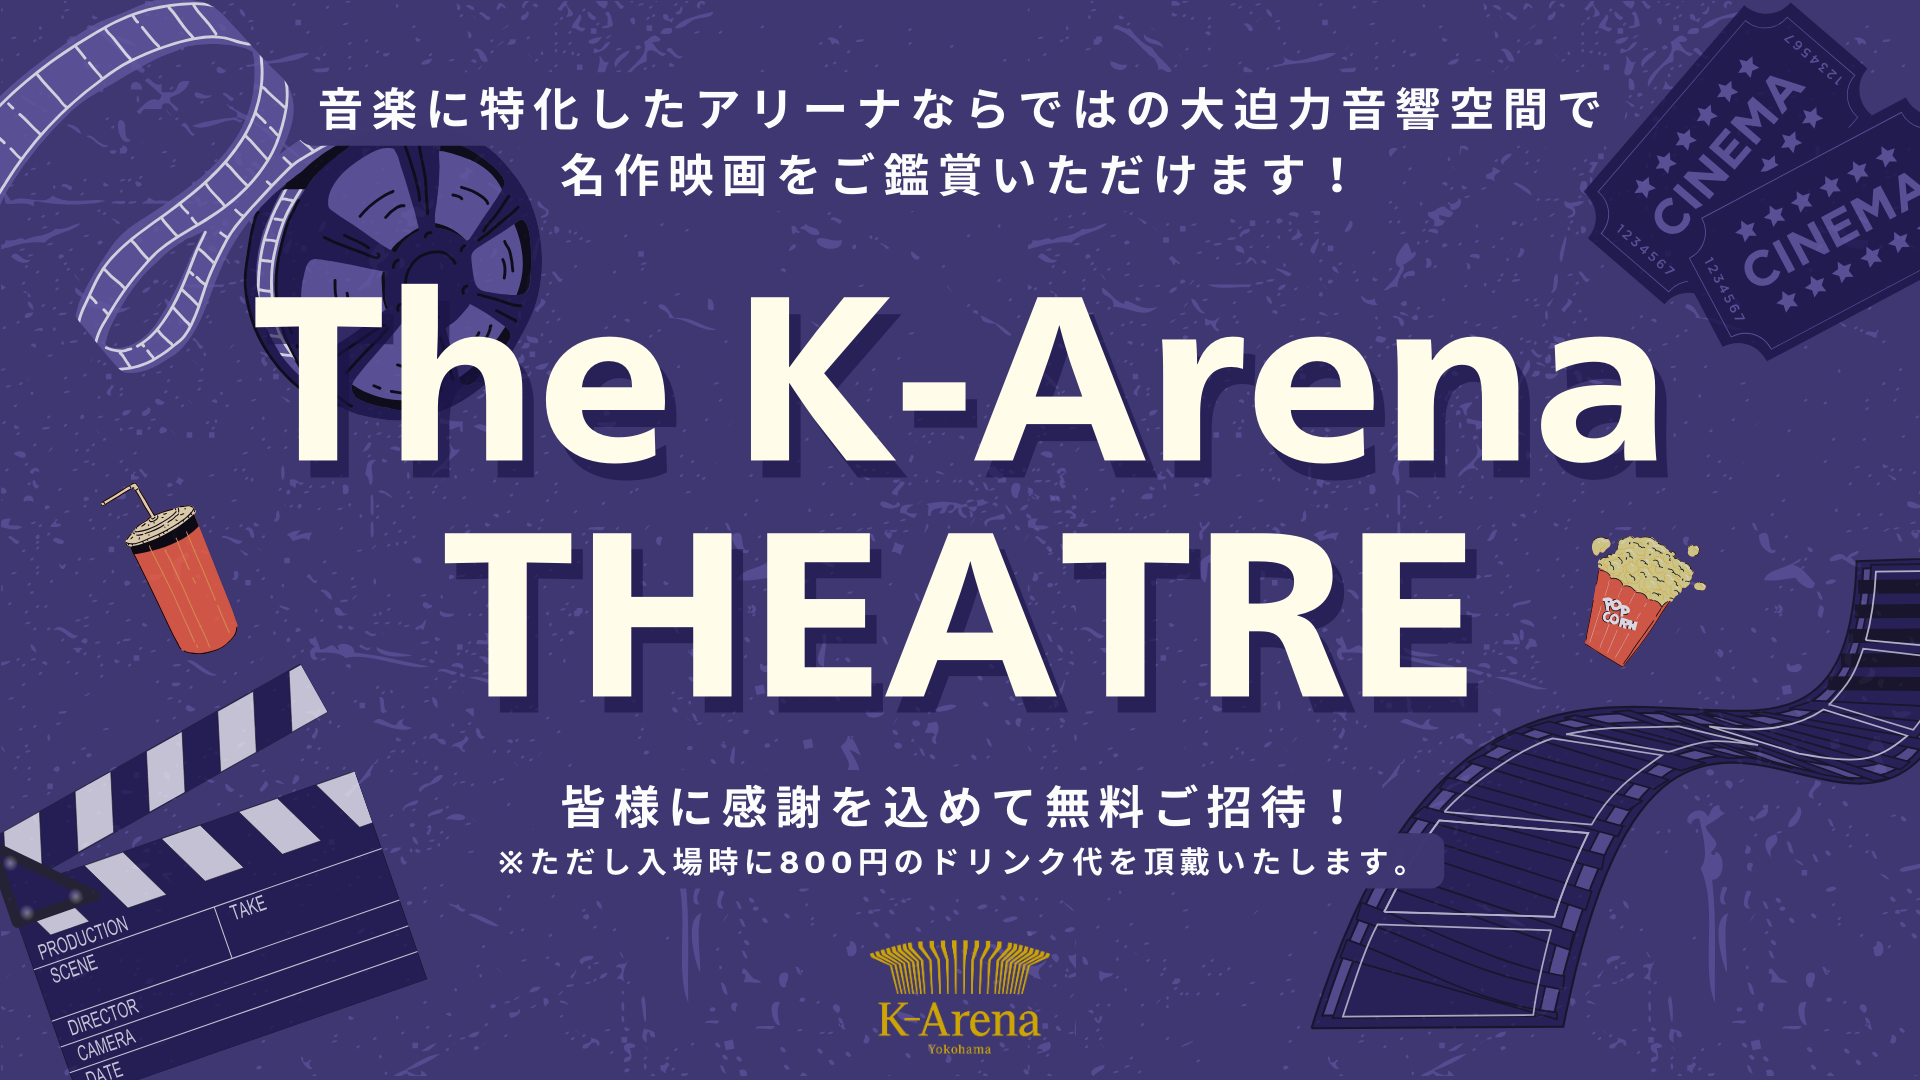 The K-Arena THEATRE